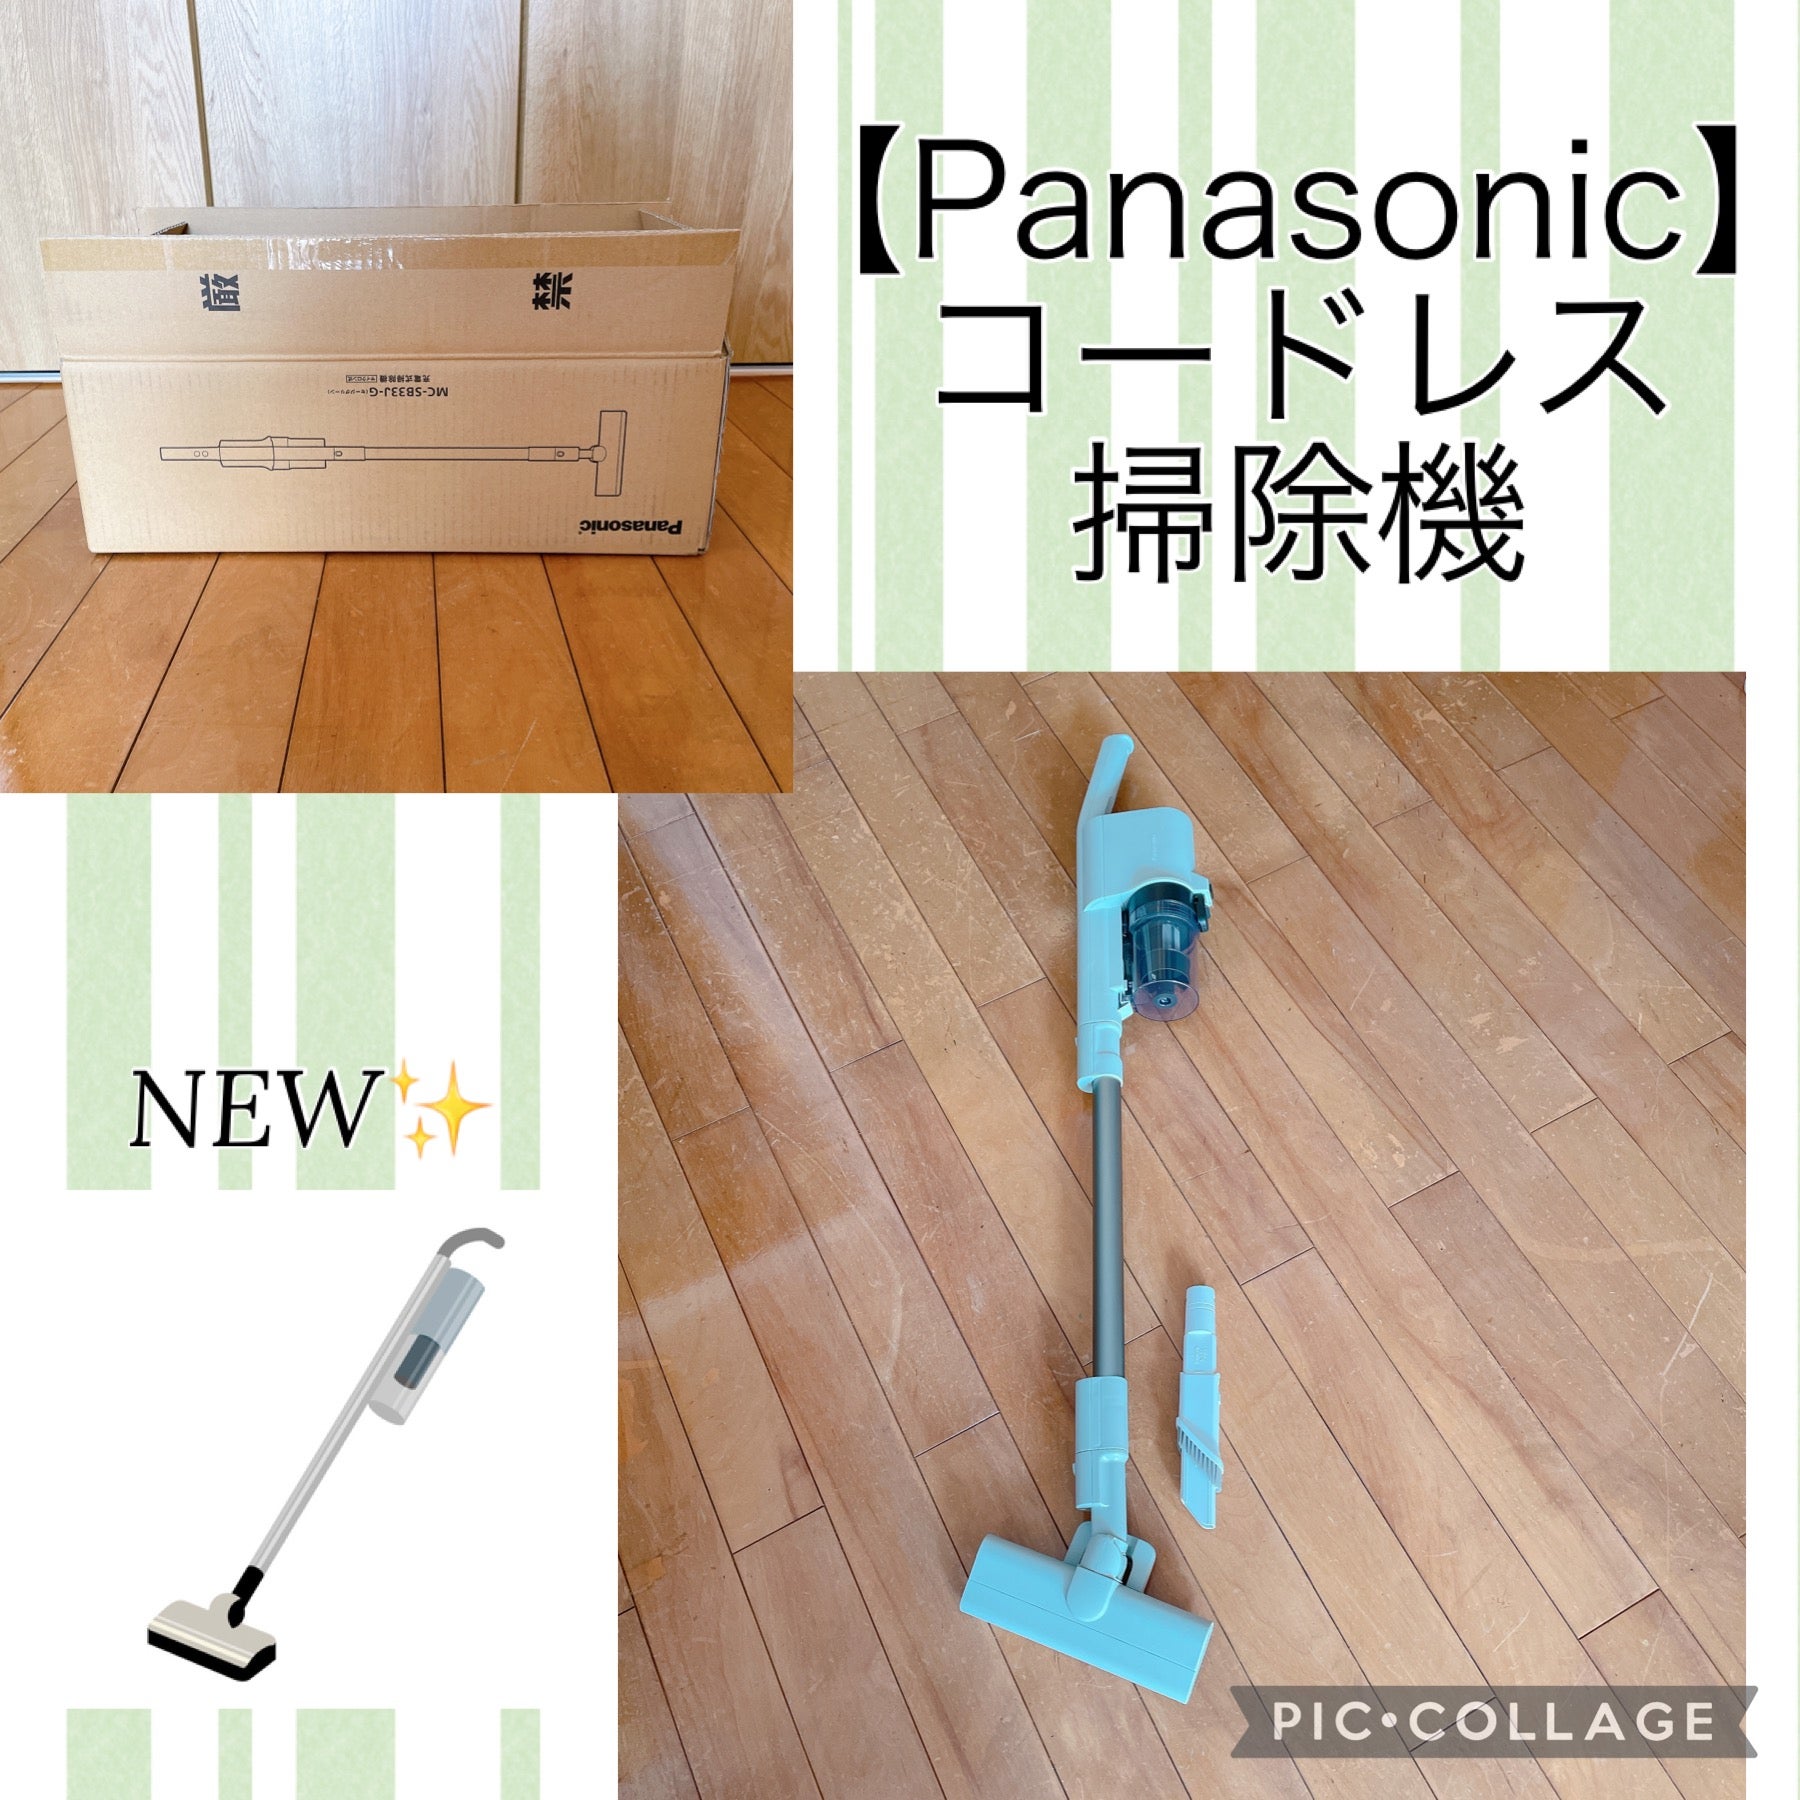 Panasonic】コードレススティック掃除機～今さらですが、初の